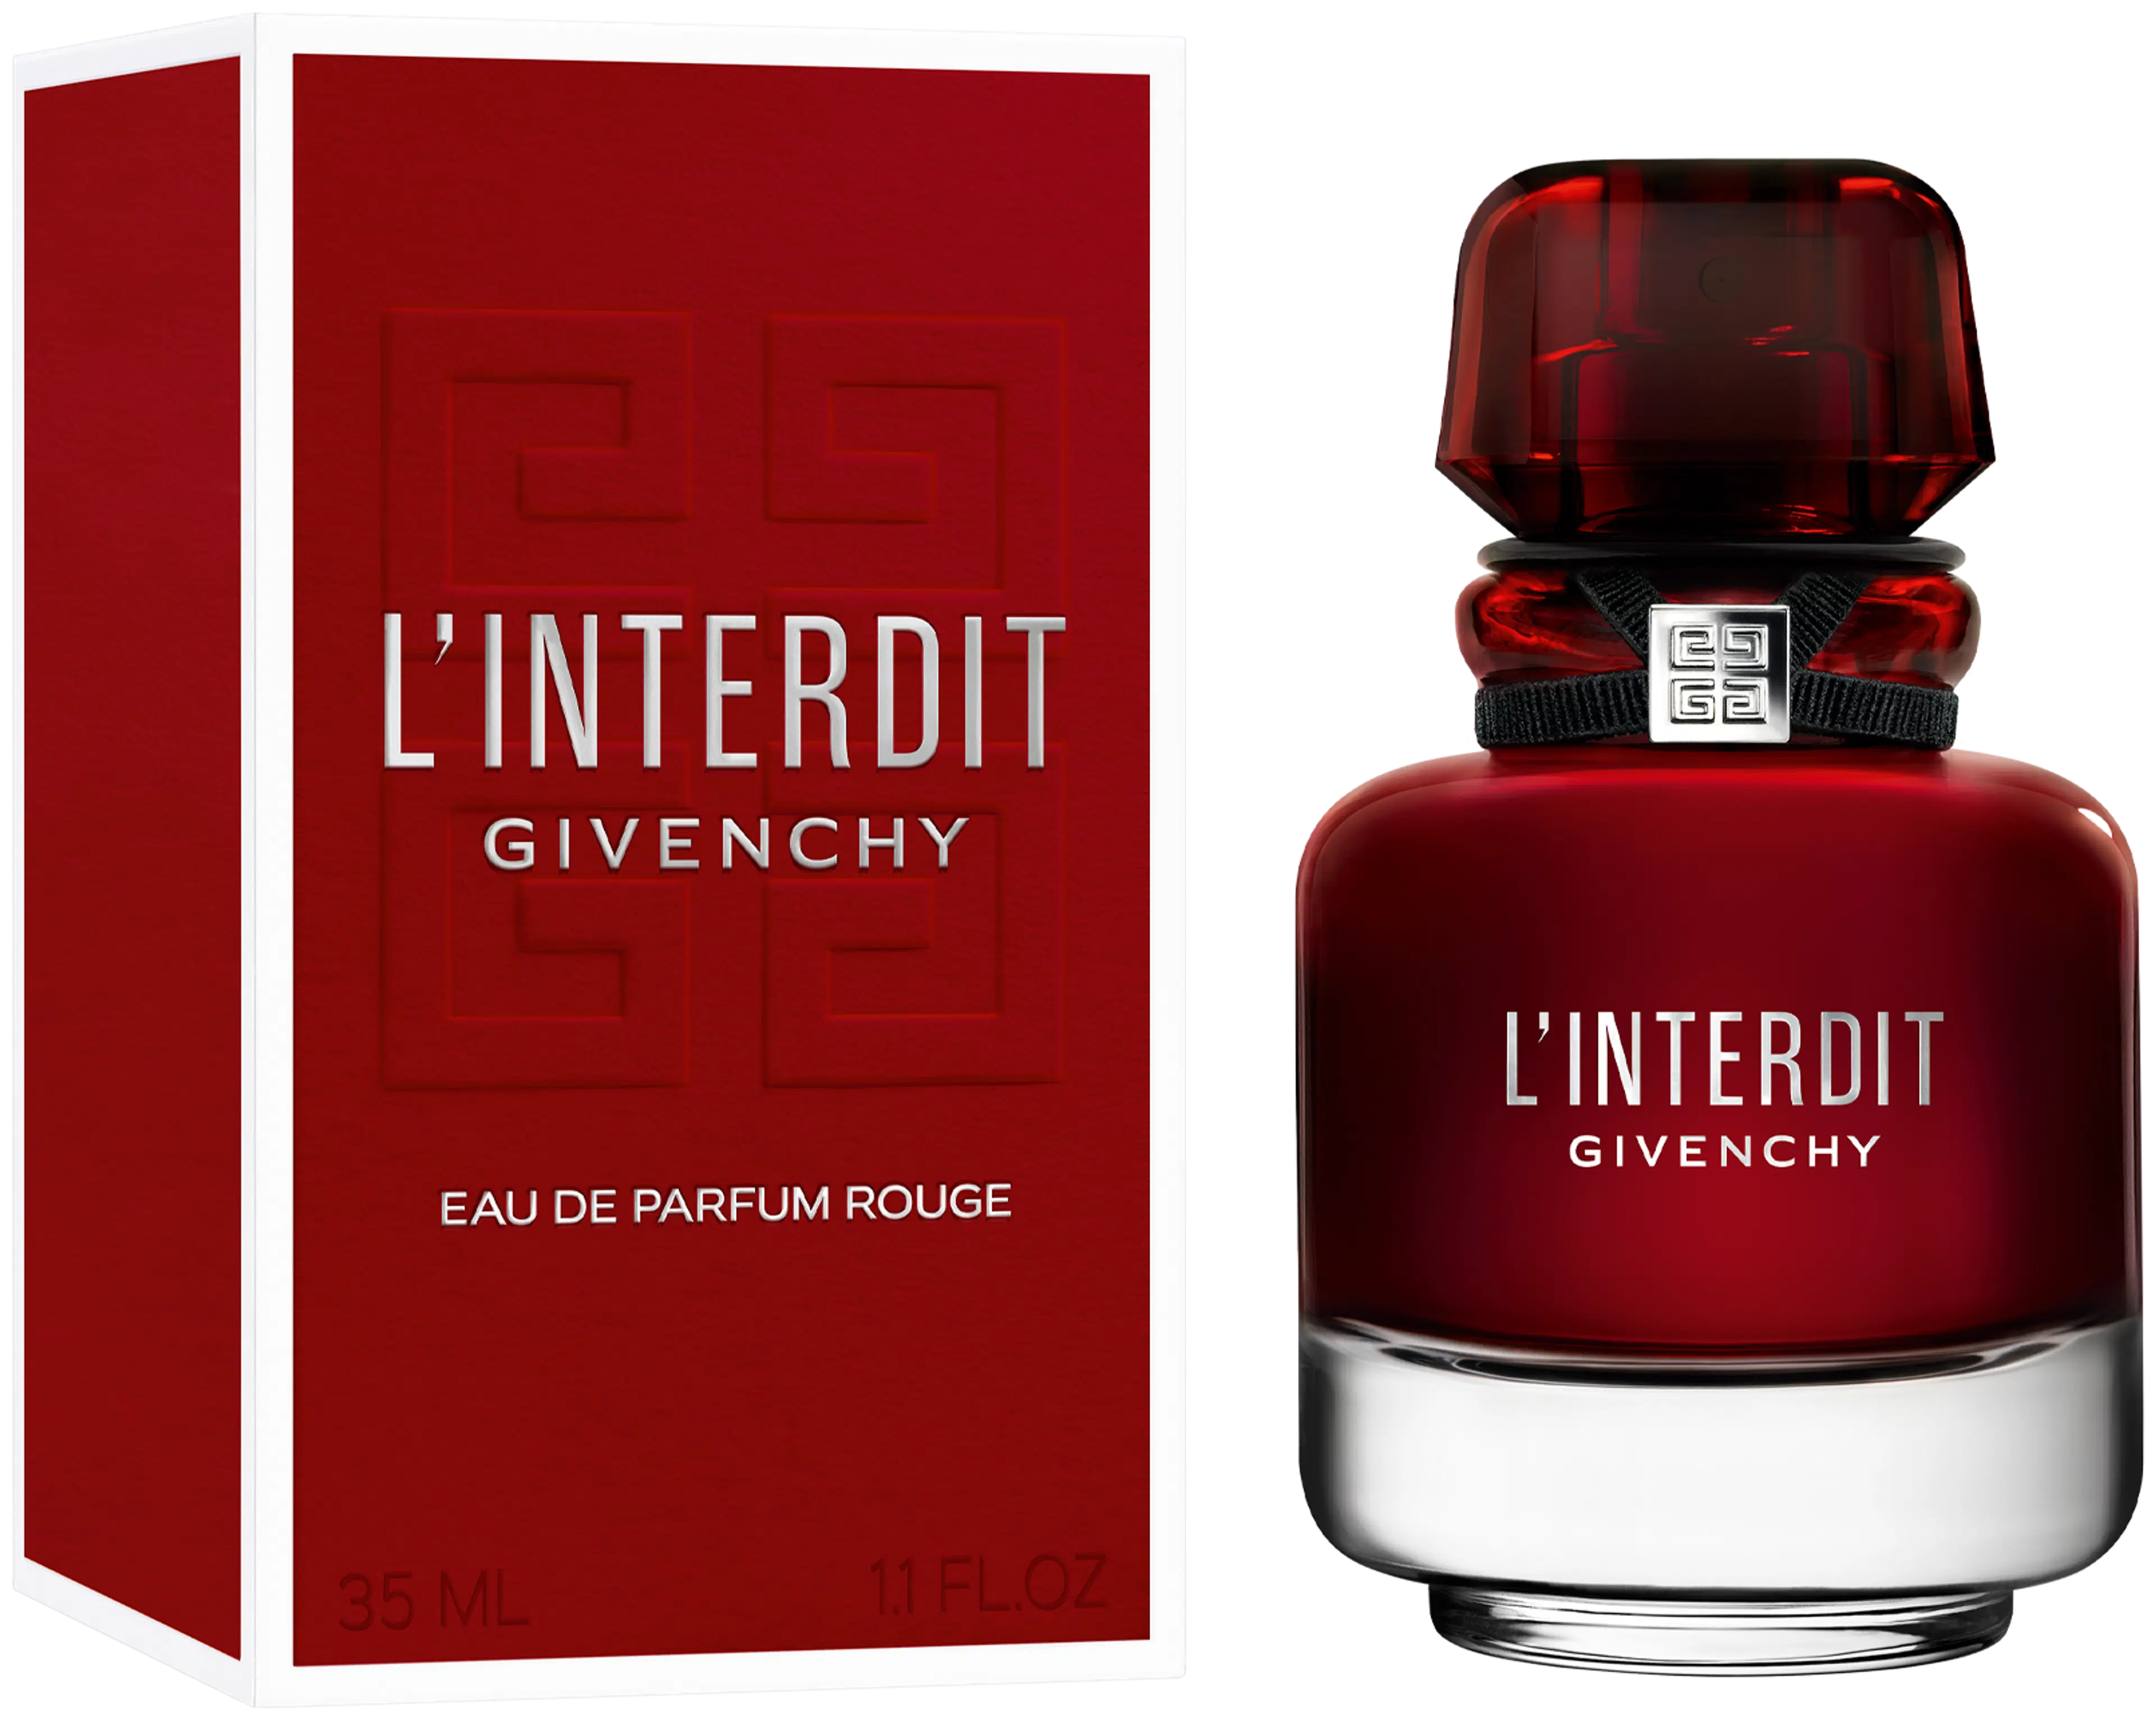 Givenchy L'Interdit EdP Rouge 35 Ml